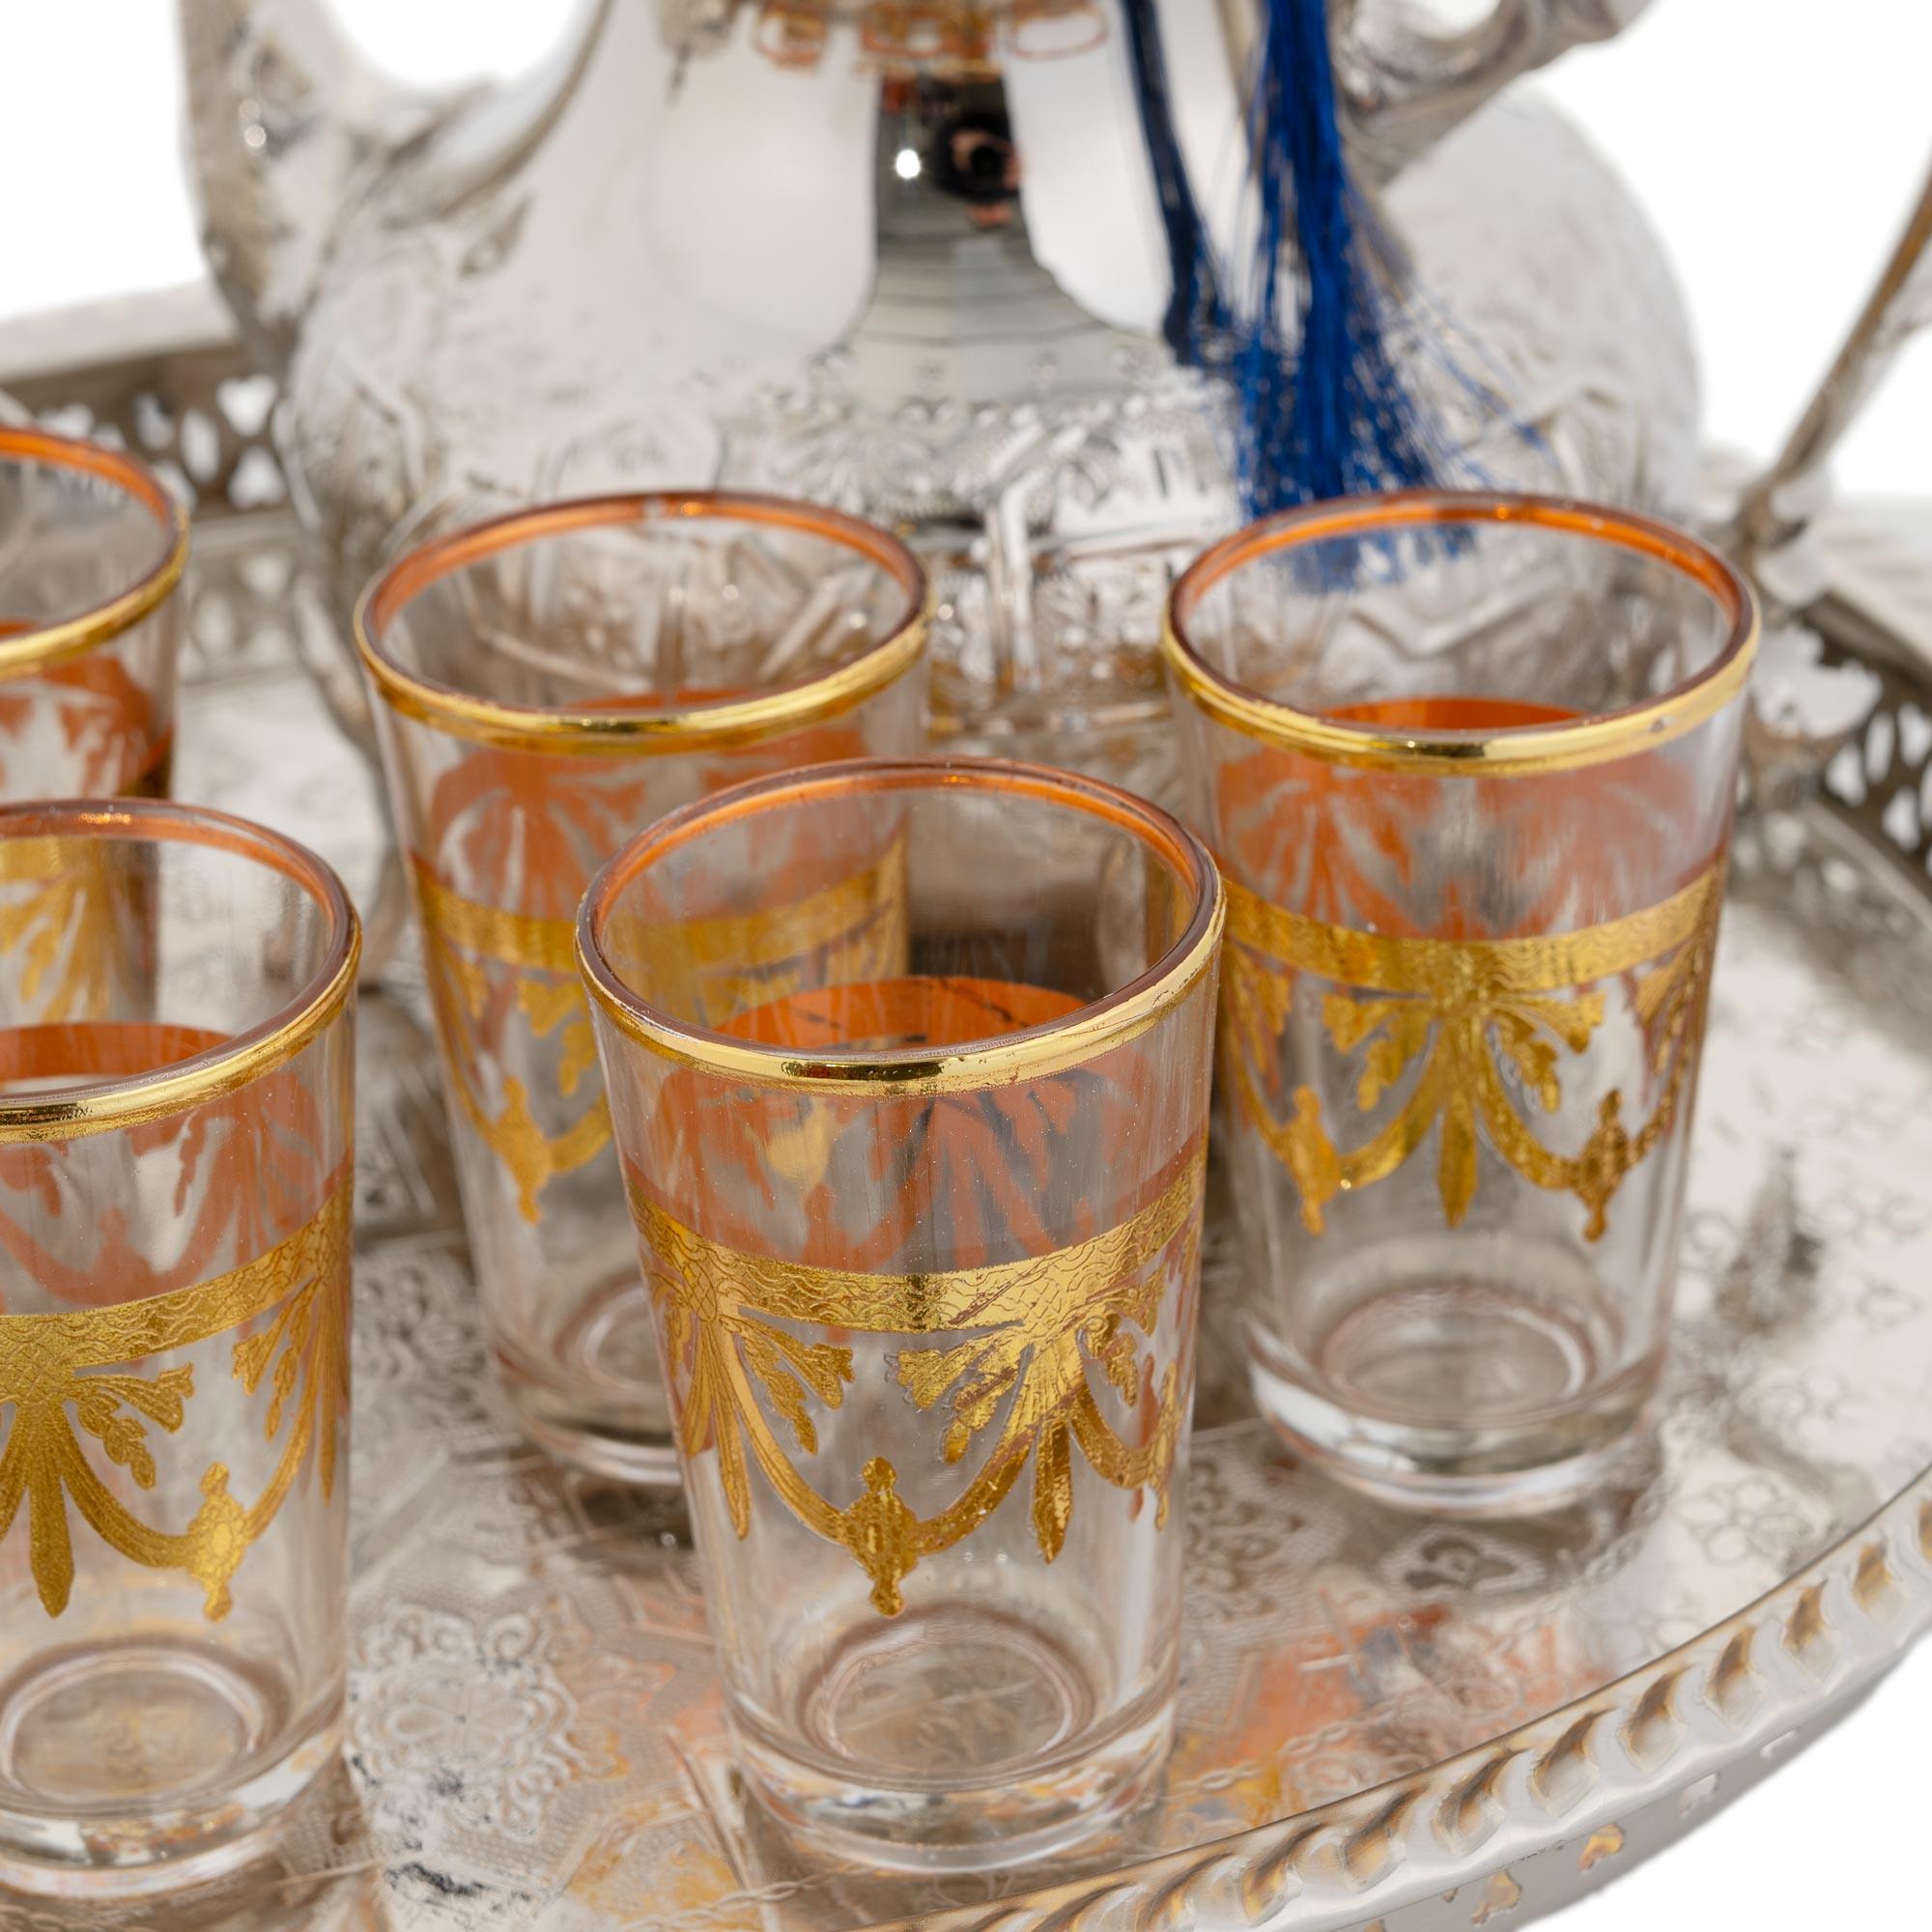 Juego de té dorado marroquí hecho a mano Tetera hecha a mano